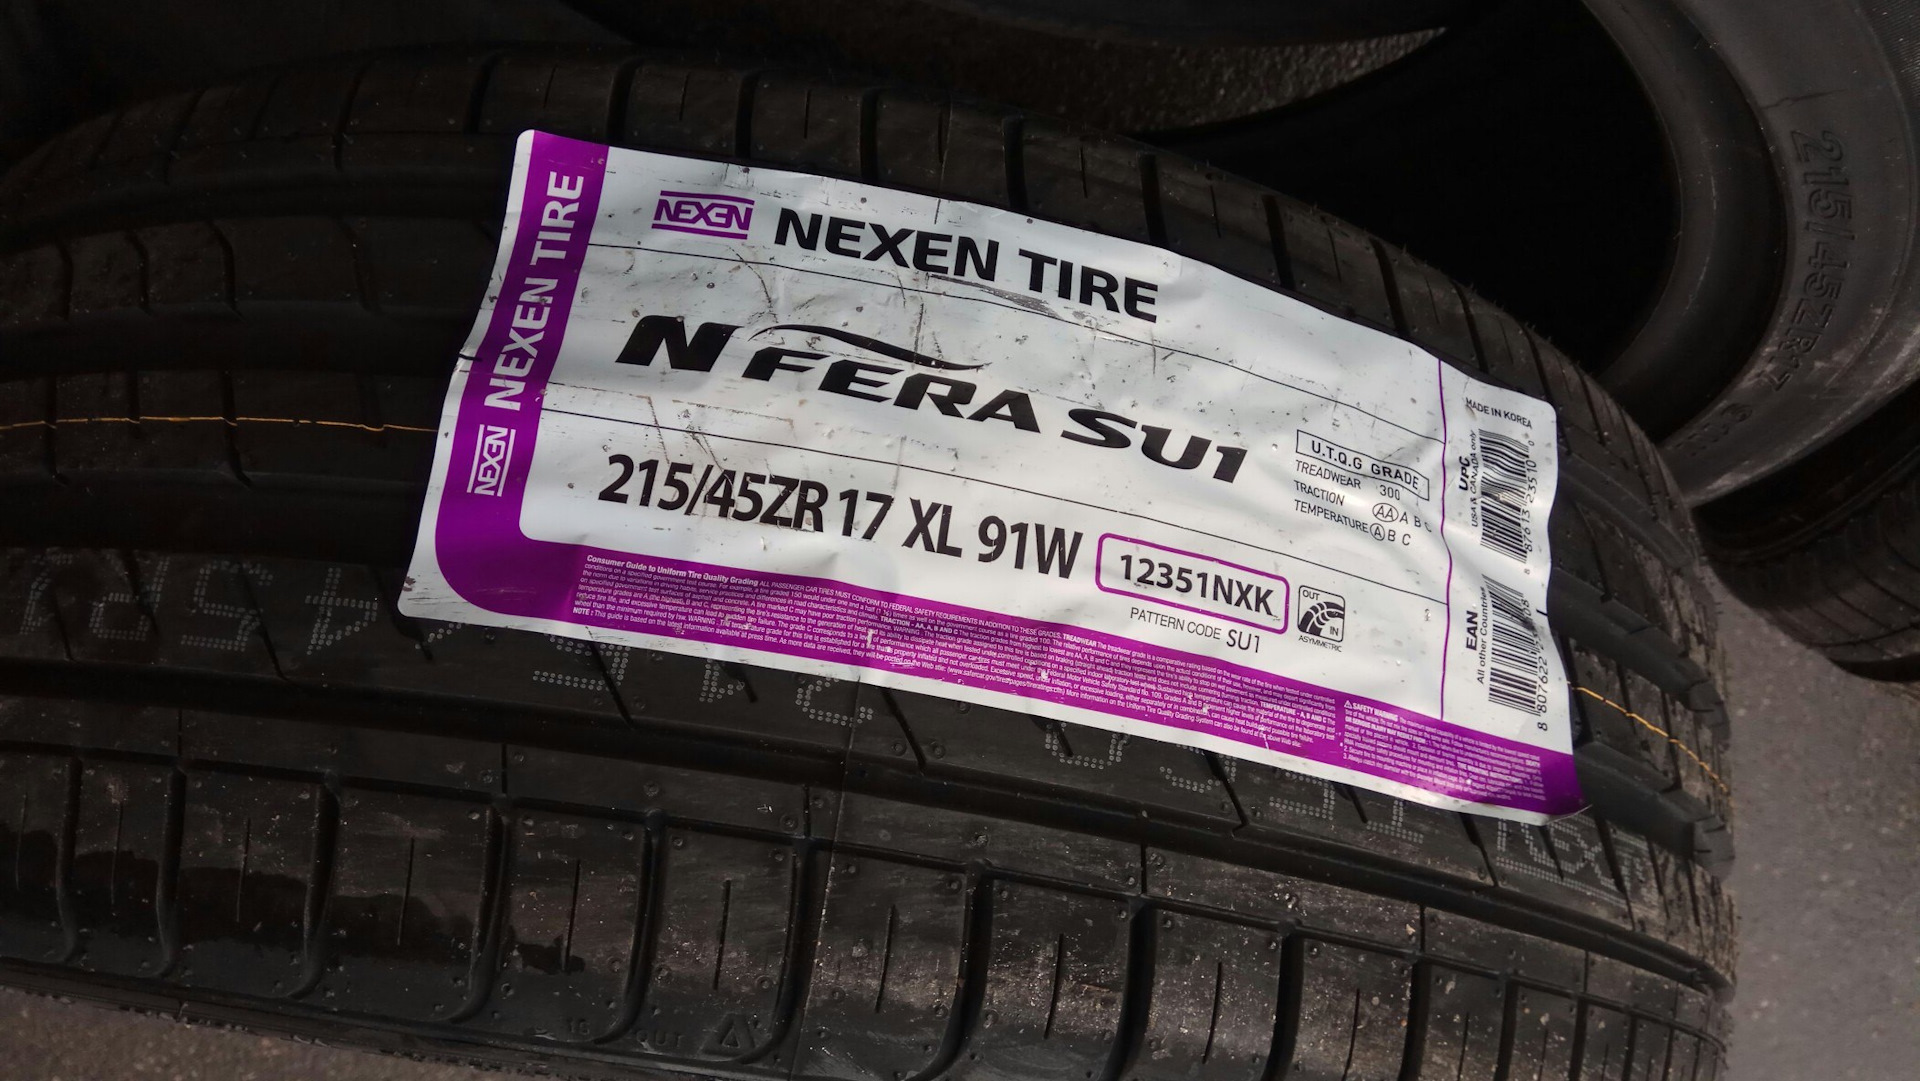 Nexen n fera отзывы. Roadstone NFERA su1. Roadstone n'Fera su1. Nexen NFERA Supreme. Nexen Tire.